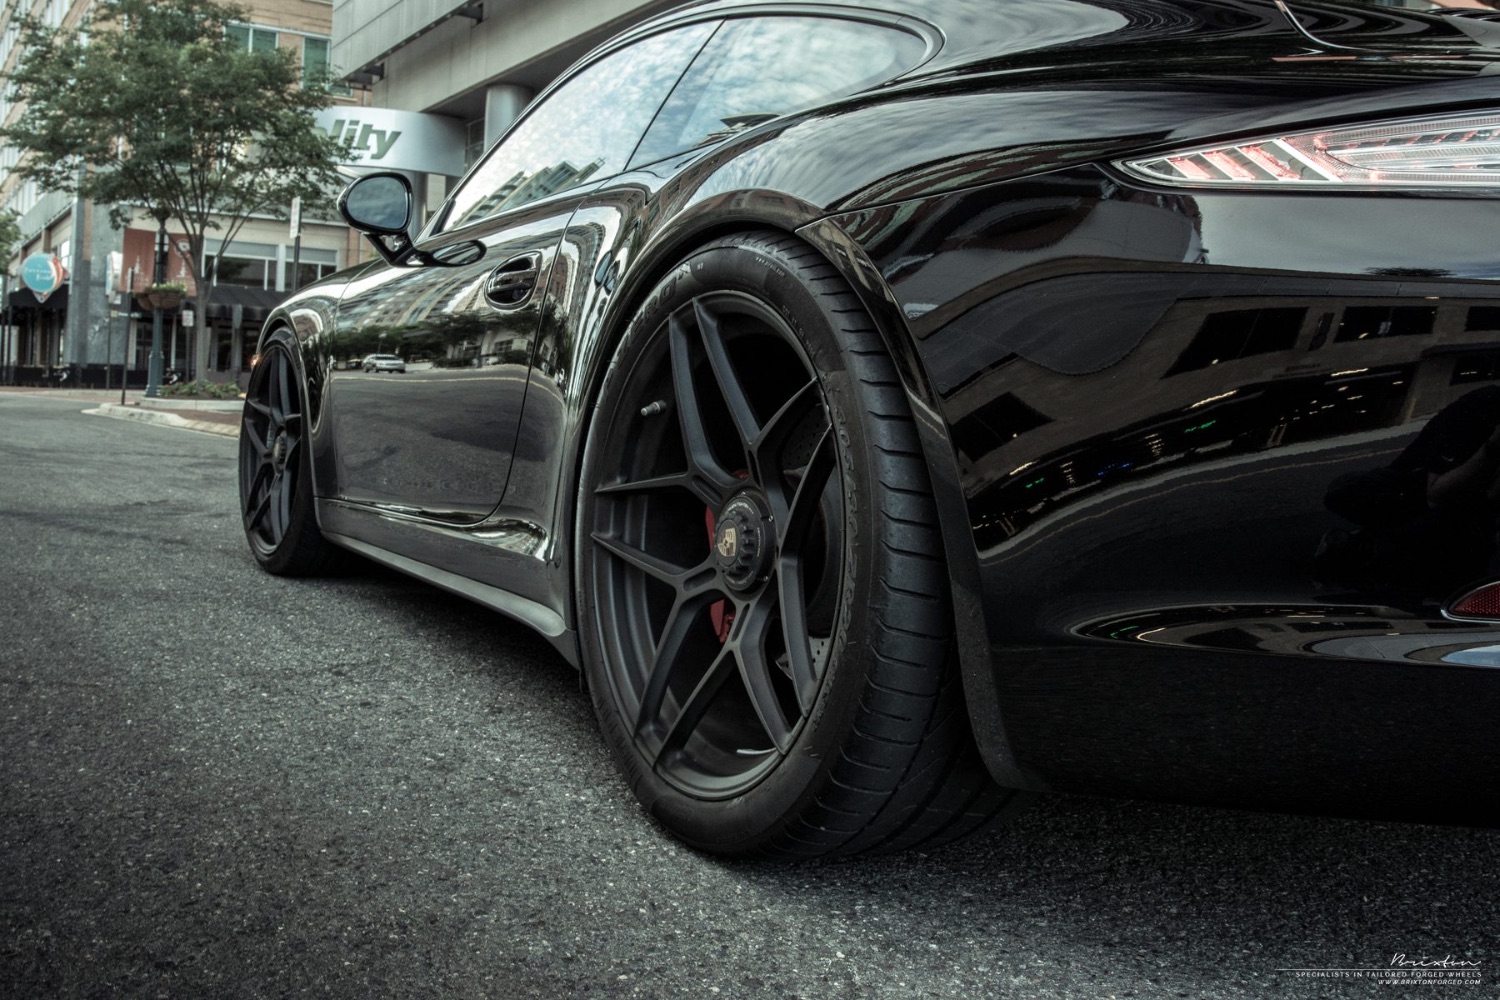 brixton-forged-wheels-black-porsche-991-carrera-s-brixton-forged-wr7-ultrasport-1-piece-concave-forged-wheels-matte-black-2-1800x1200